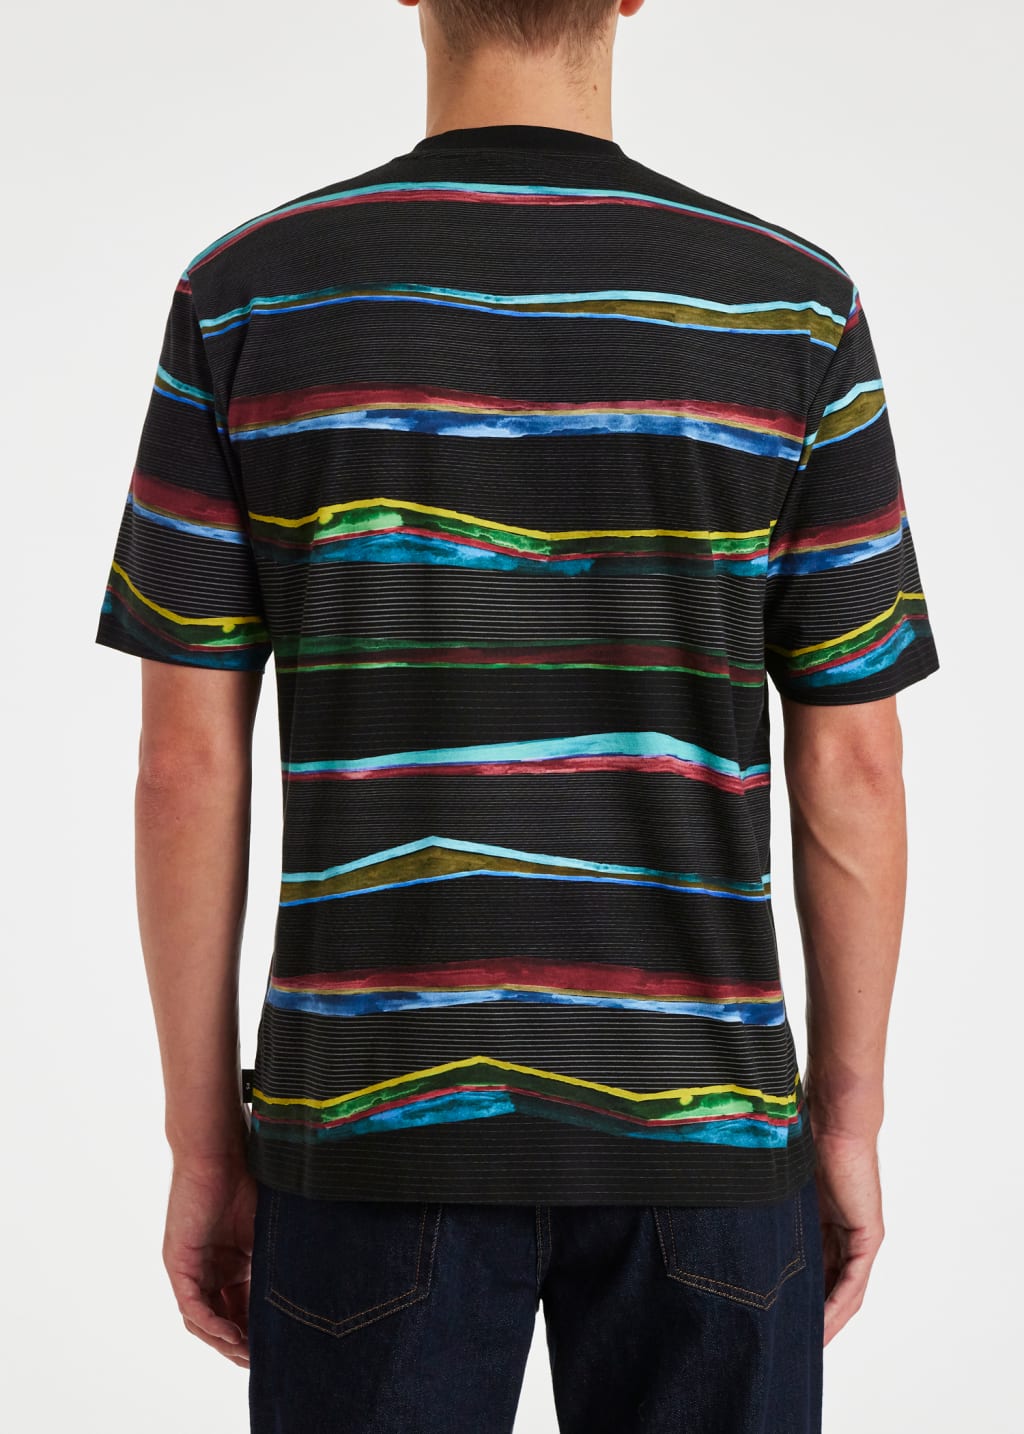 Model View - Black 'Plains' Stripe Print T-Shirt Paul Smith